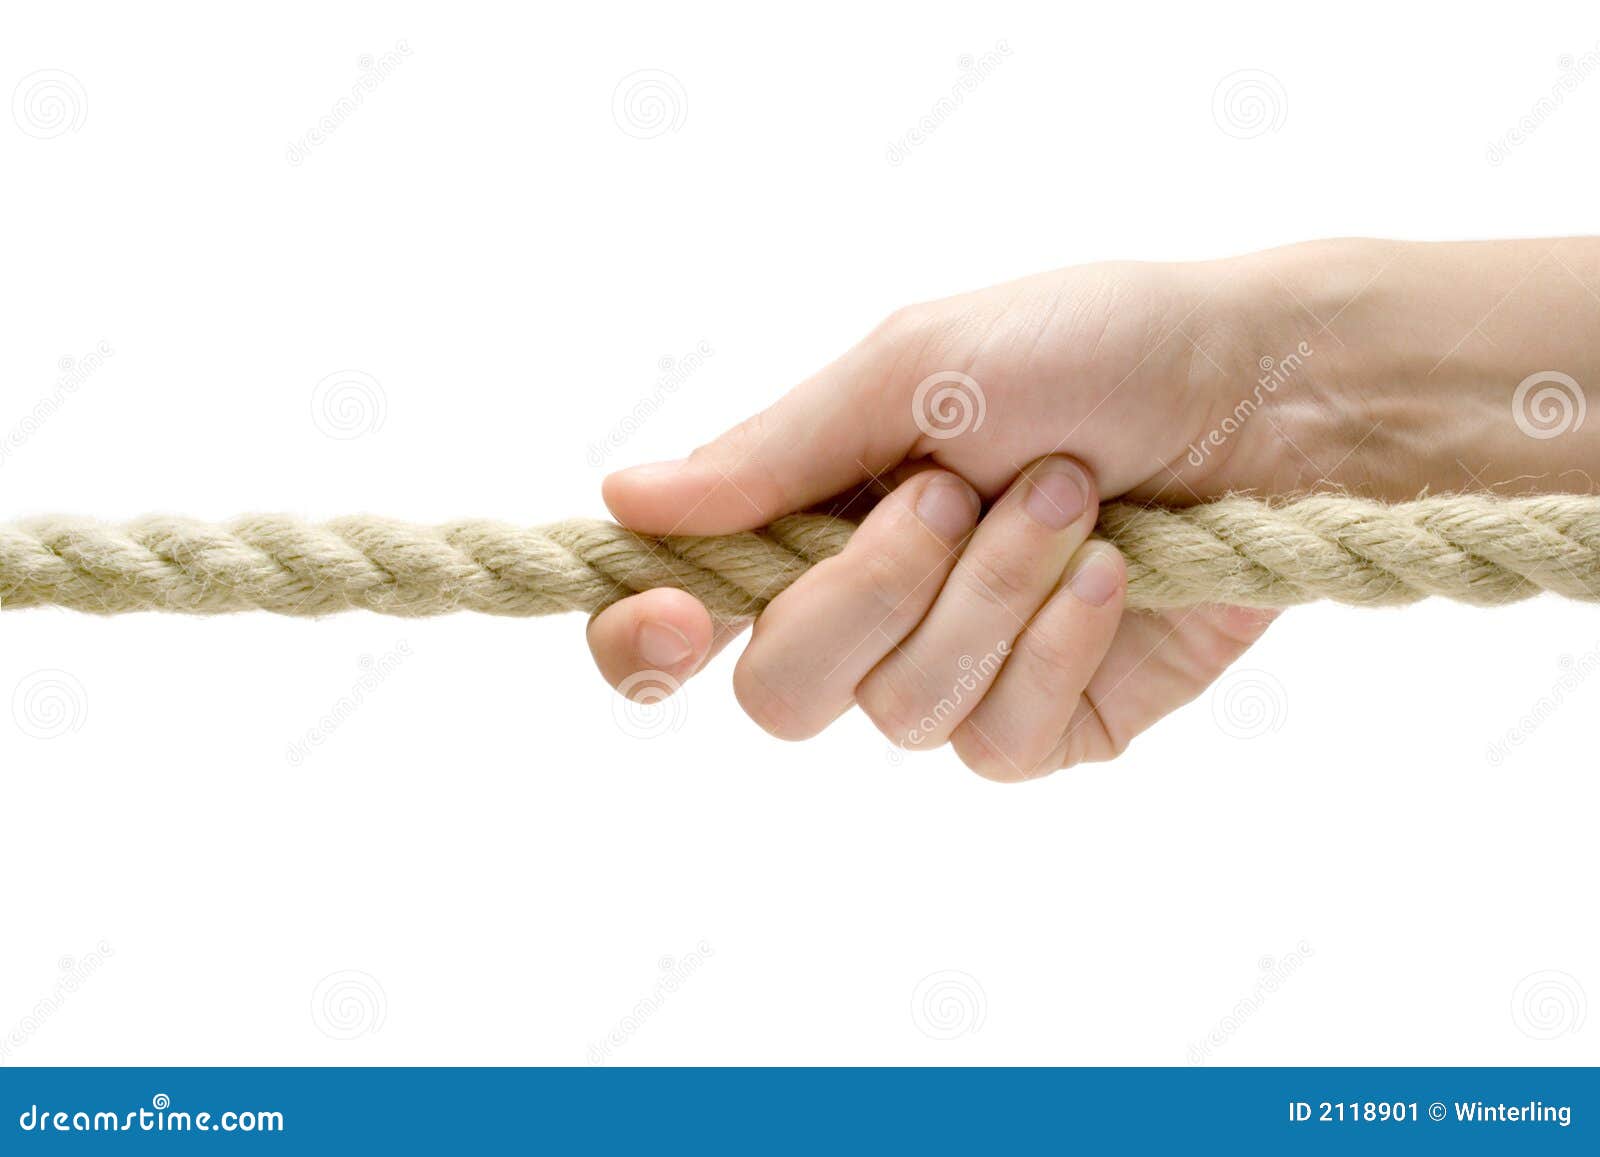 Hand Pulling Rope stock image. Image of endurance, achievement - 2118901